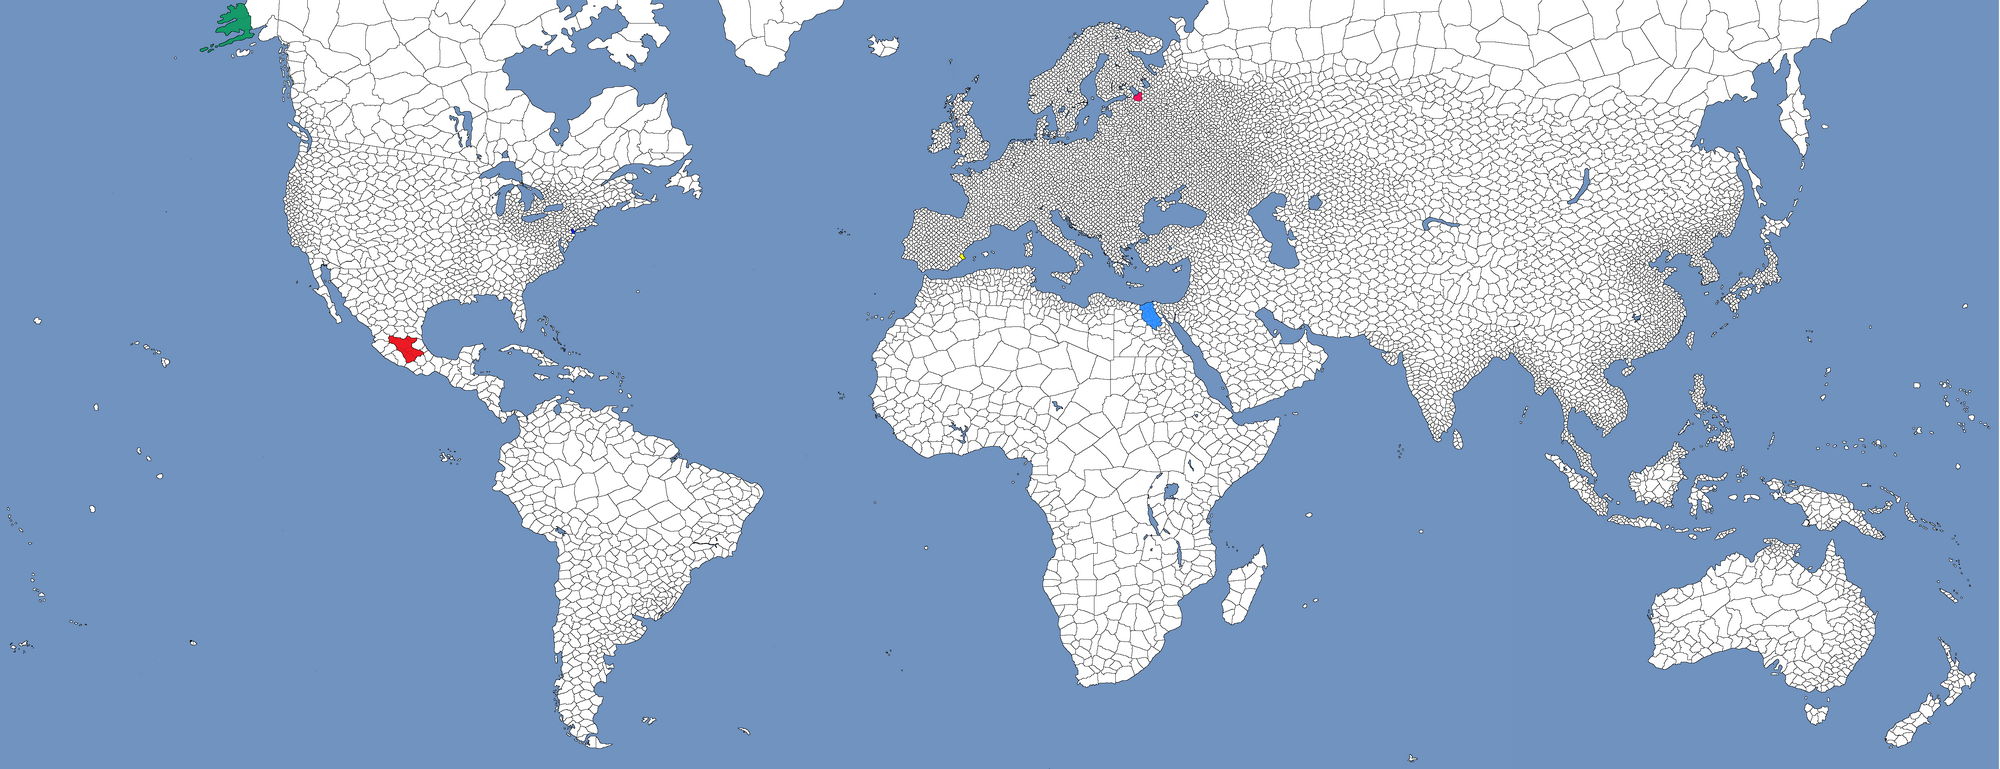 Карта провинций мира